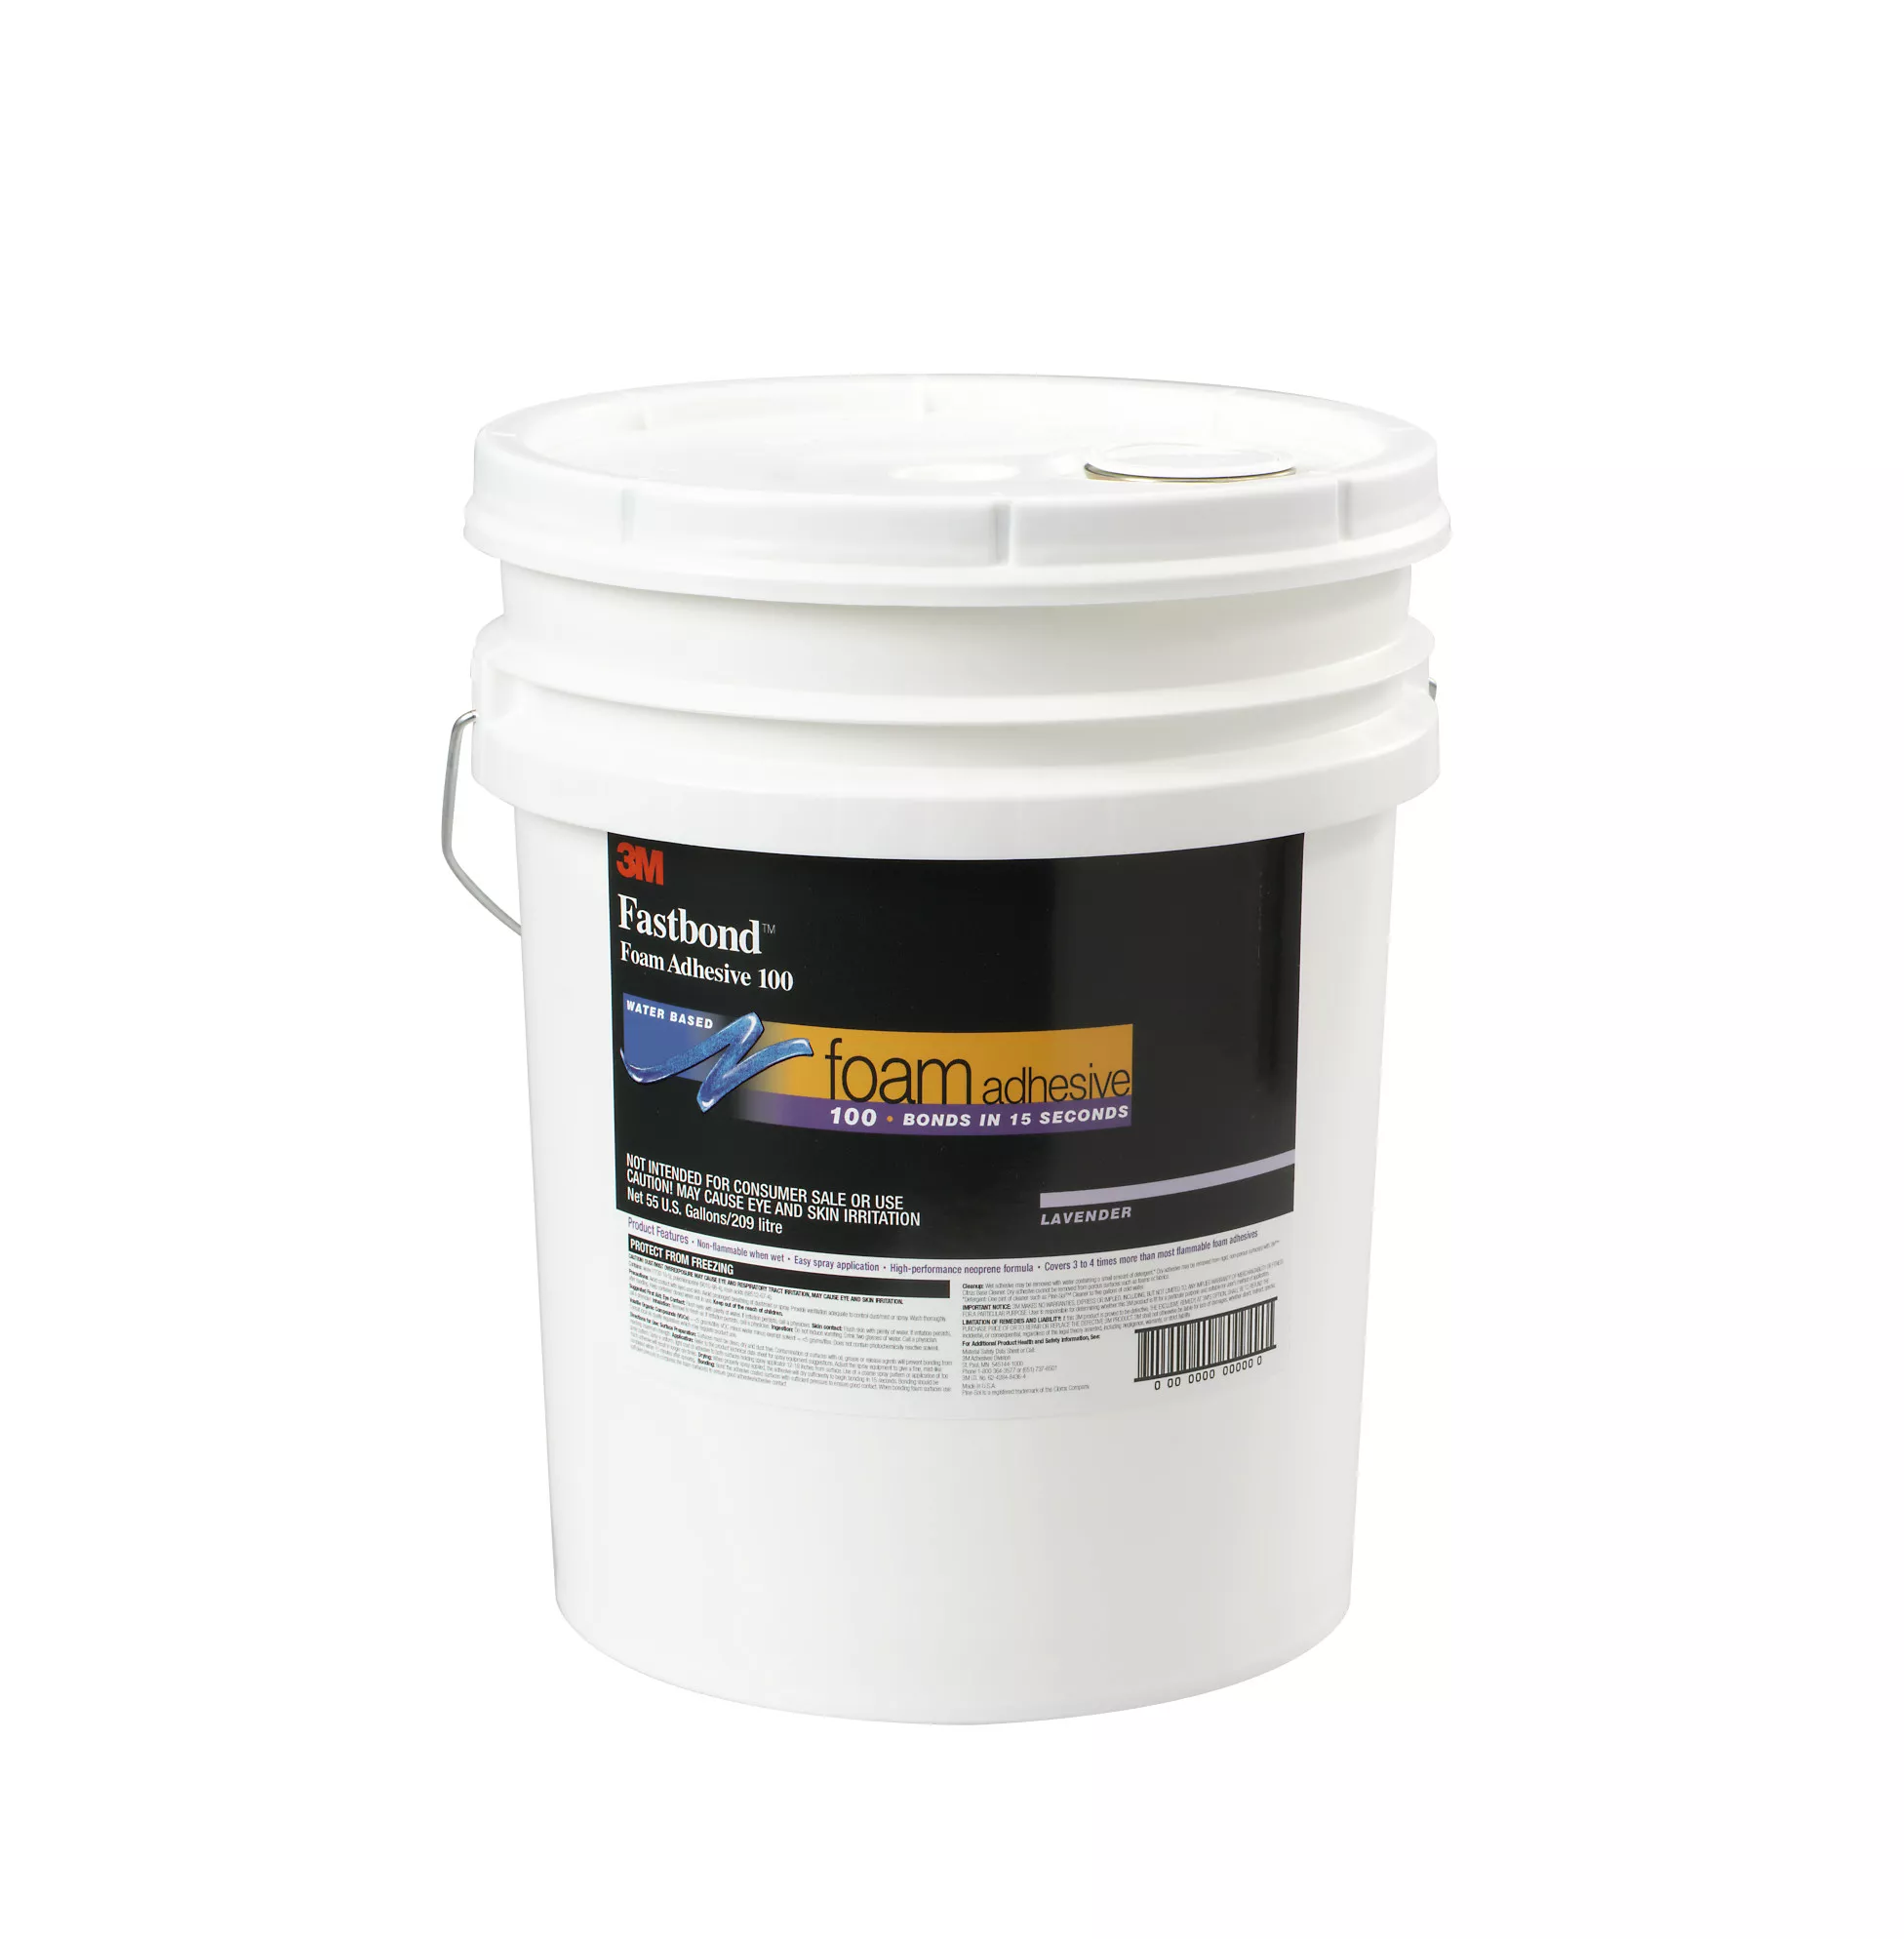 SKU 7000121392 | 3M™ Fastbond™ Foam Adhesive 100NF